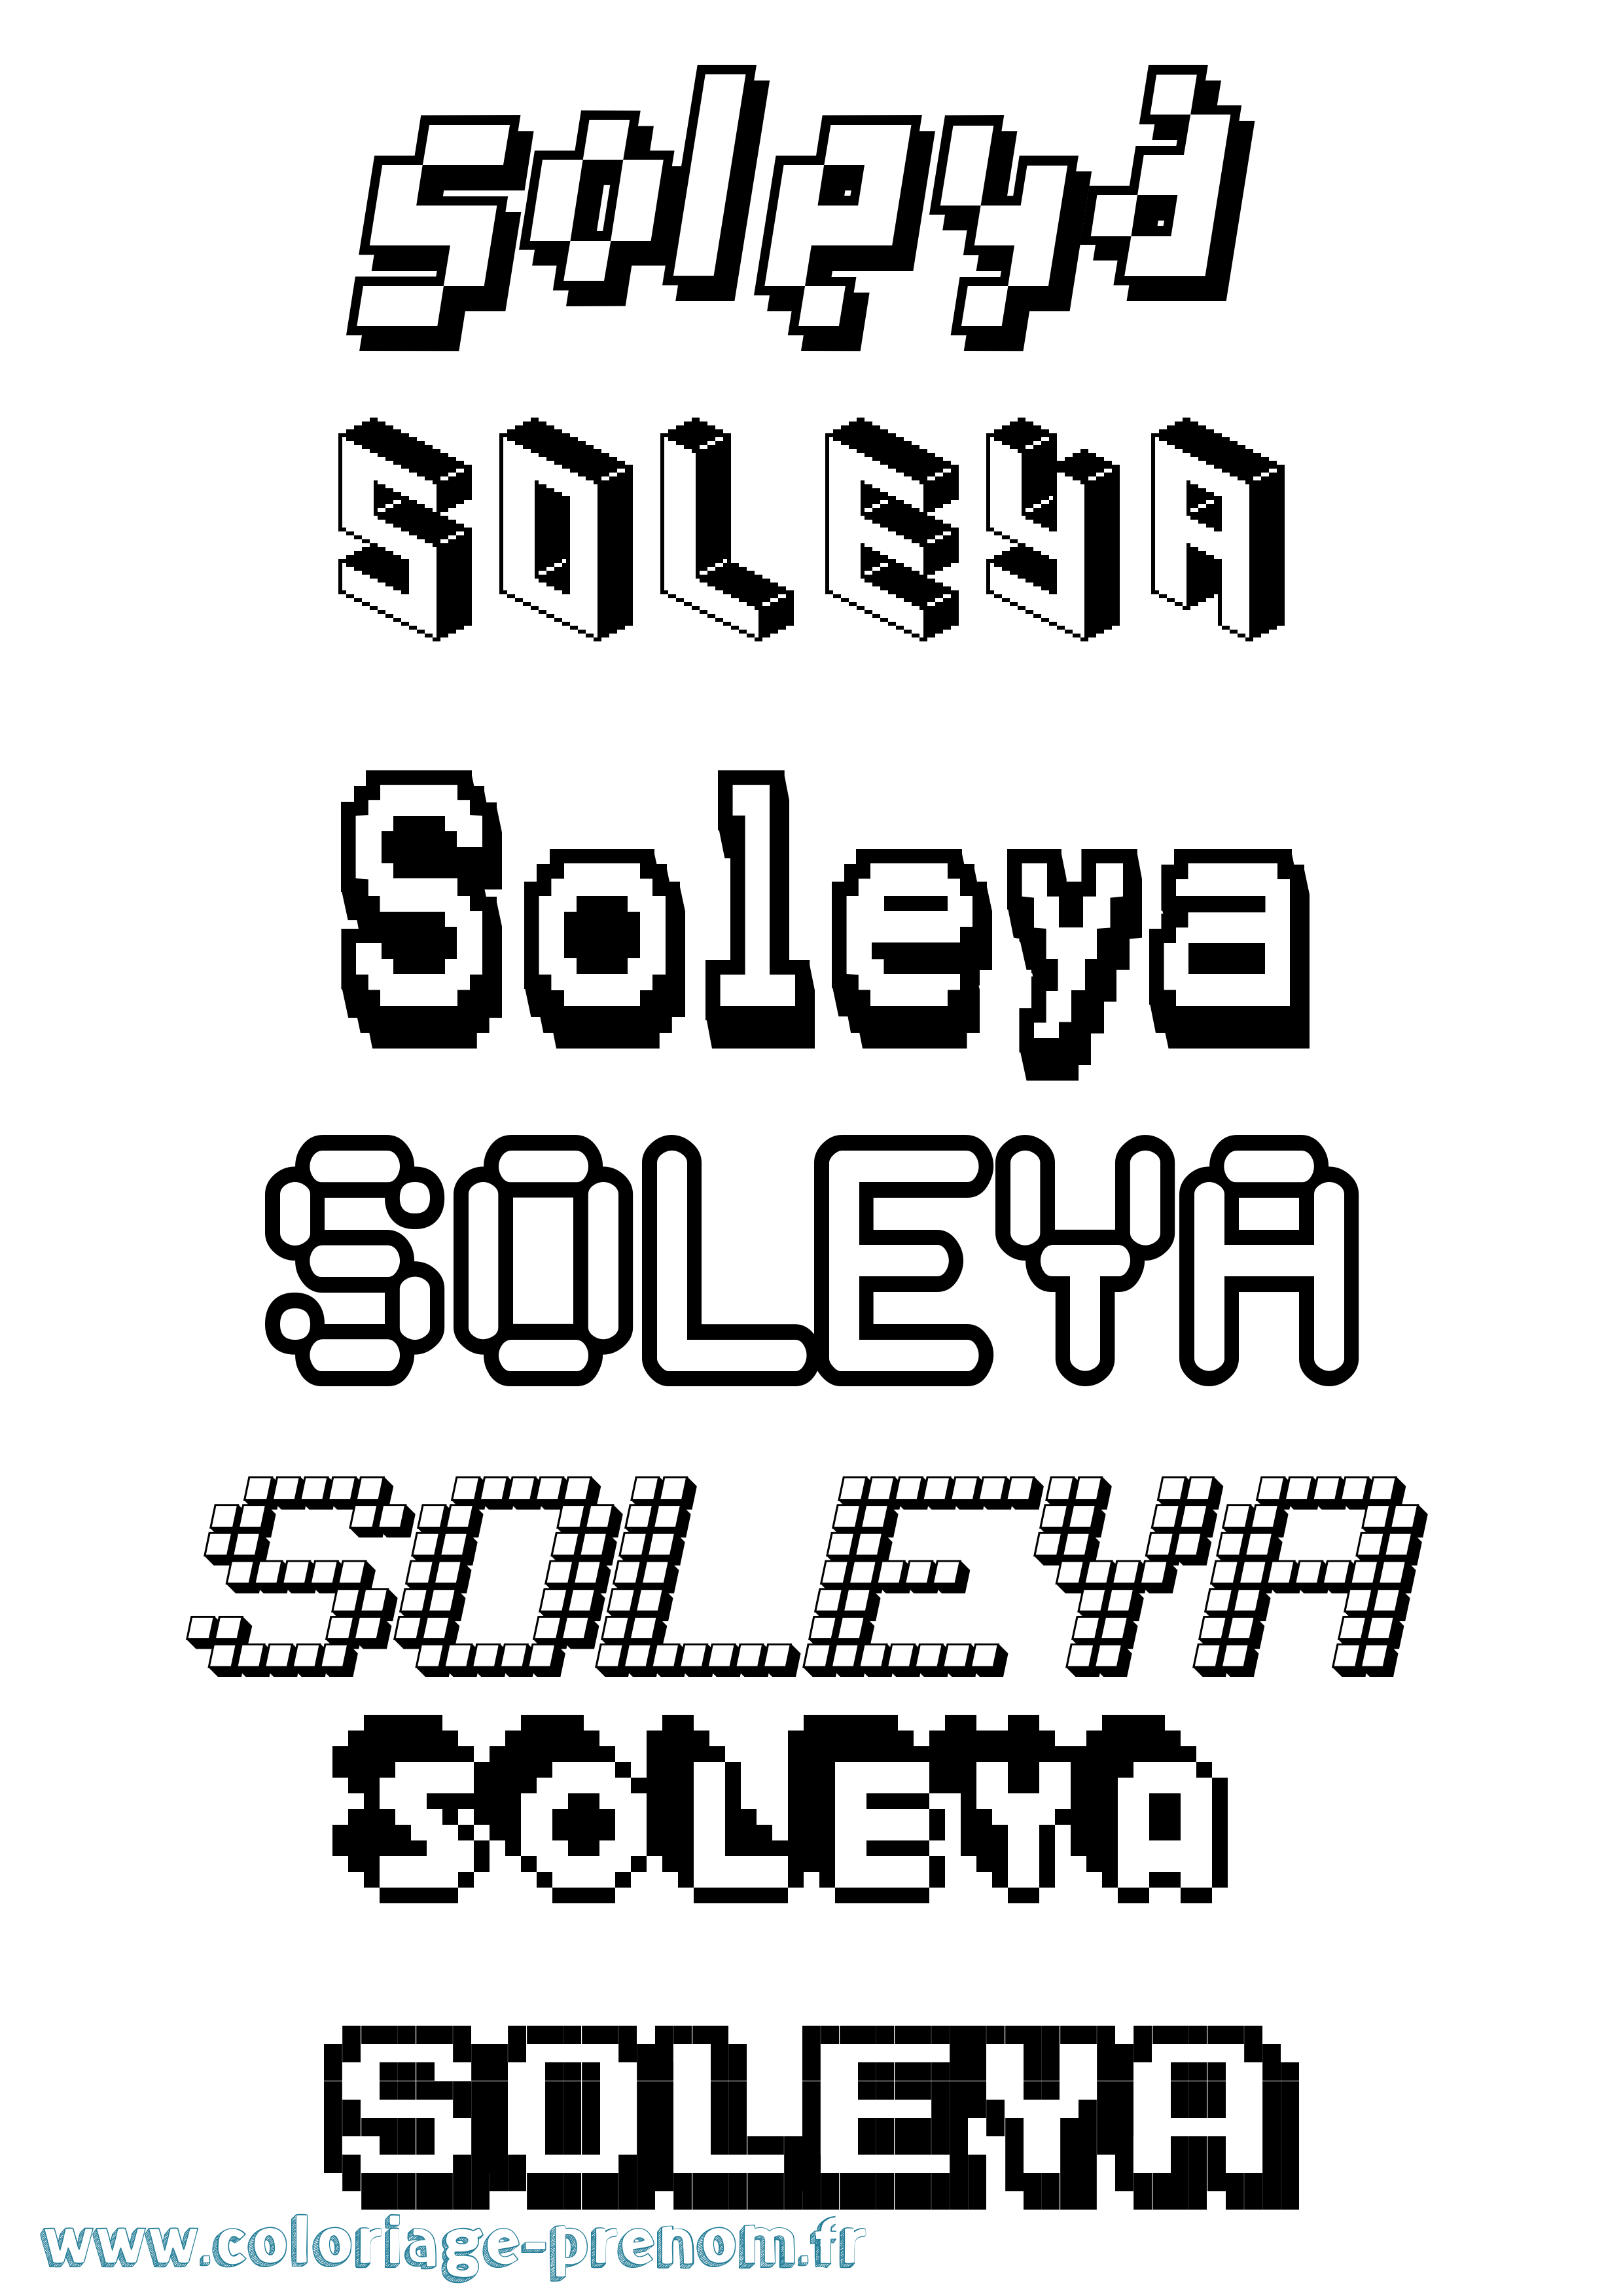 Coloriage prénom Soleya Pixel